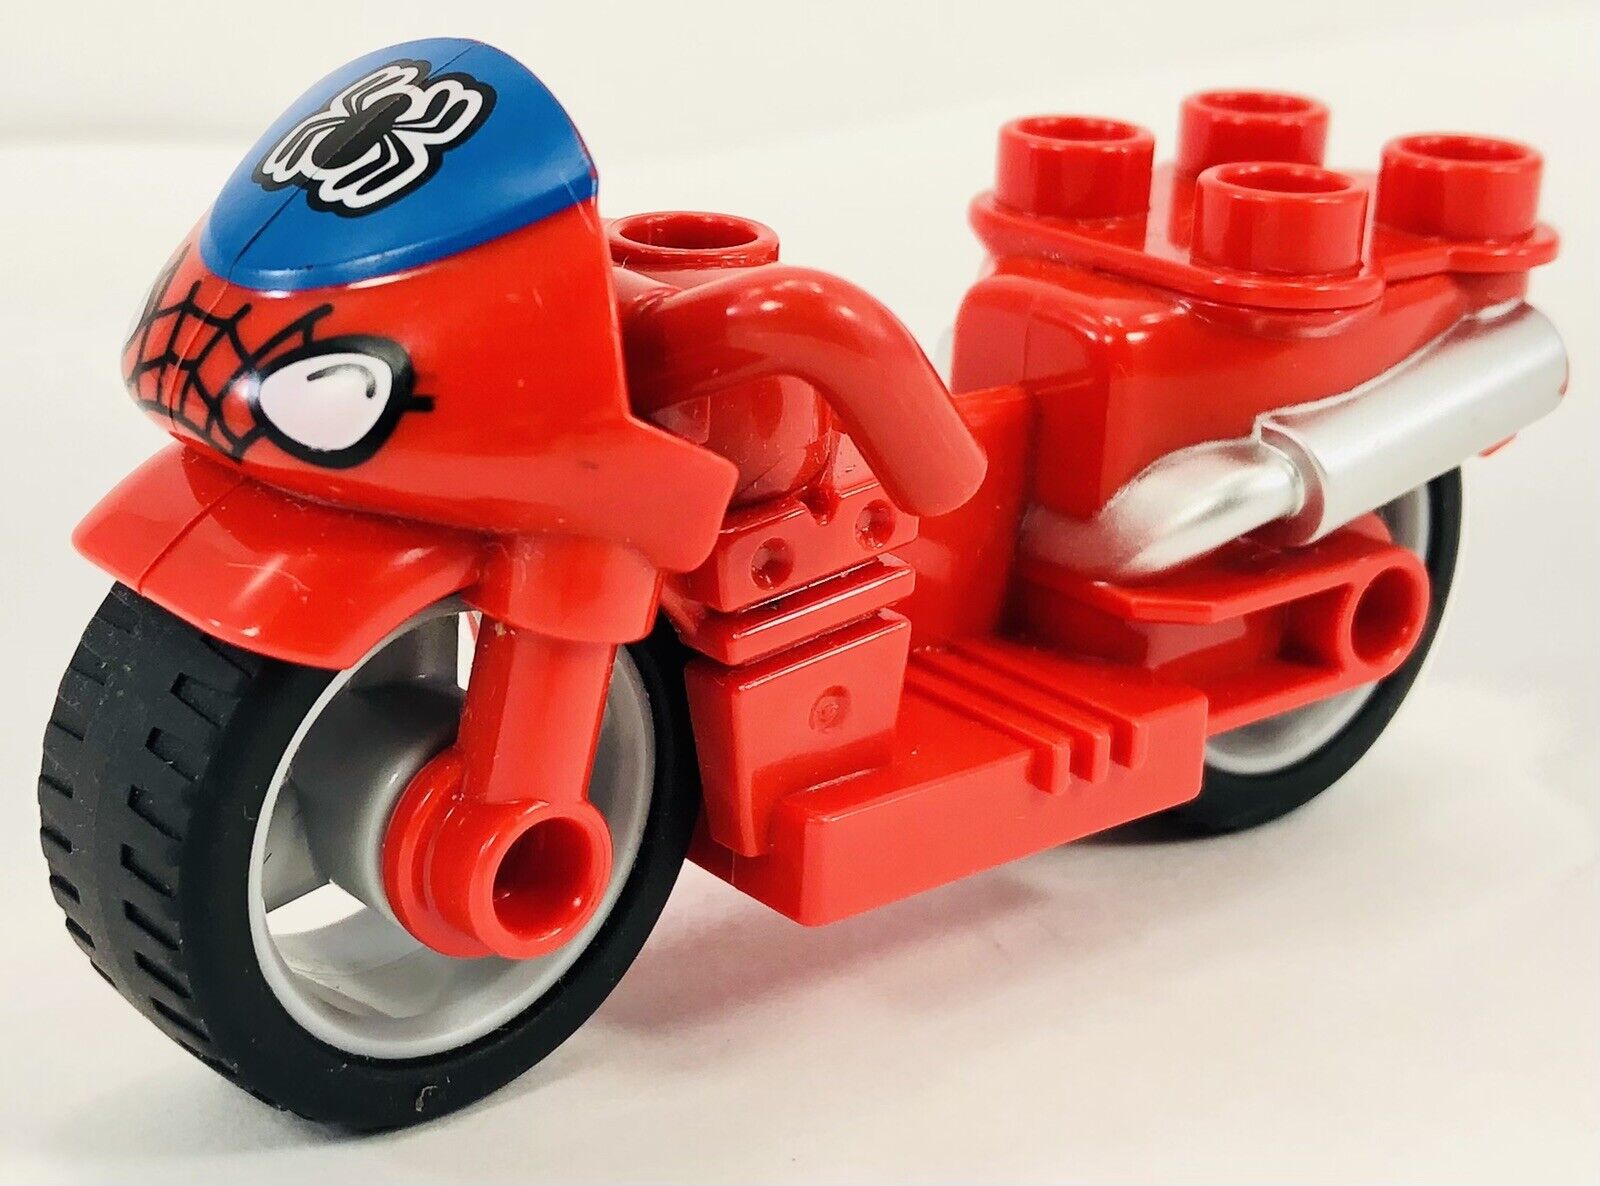 Lego Duplo 10607 10876 Spider-Man Red Blue Motorcycle Bike Piece Part Only